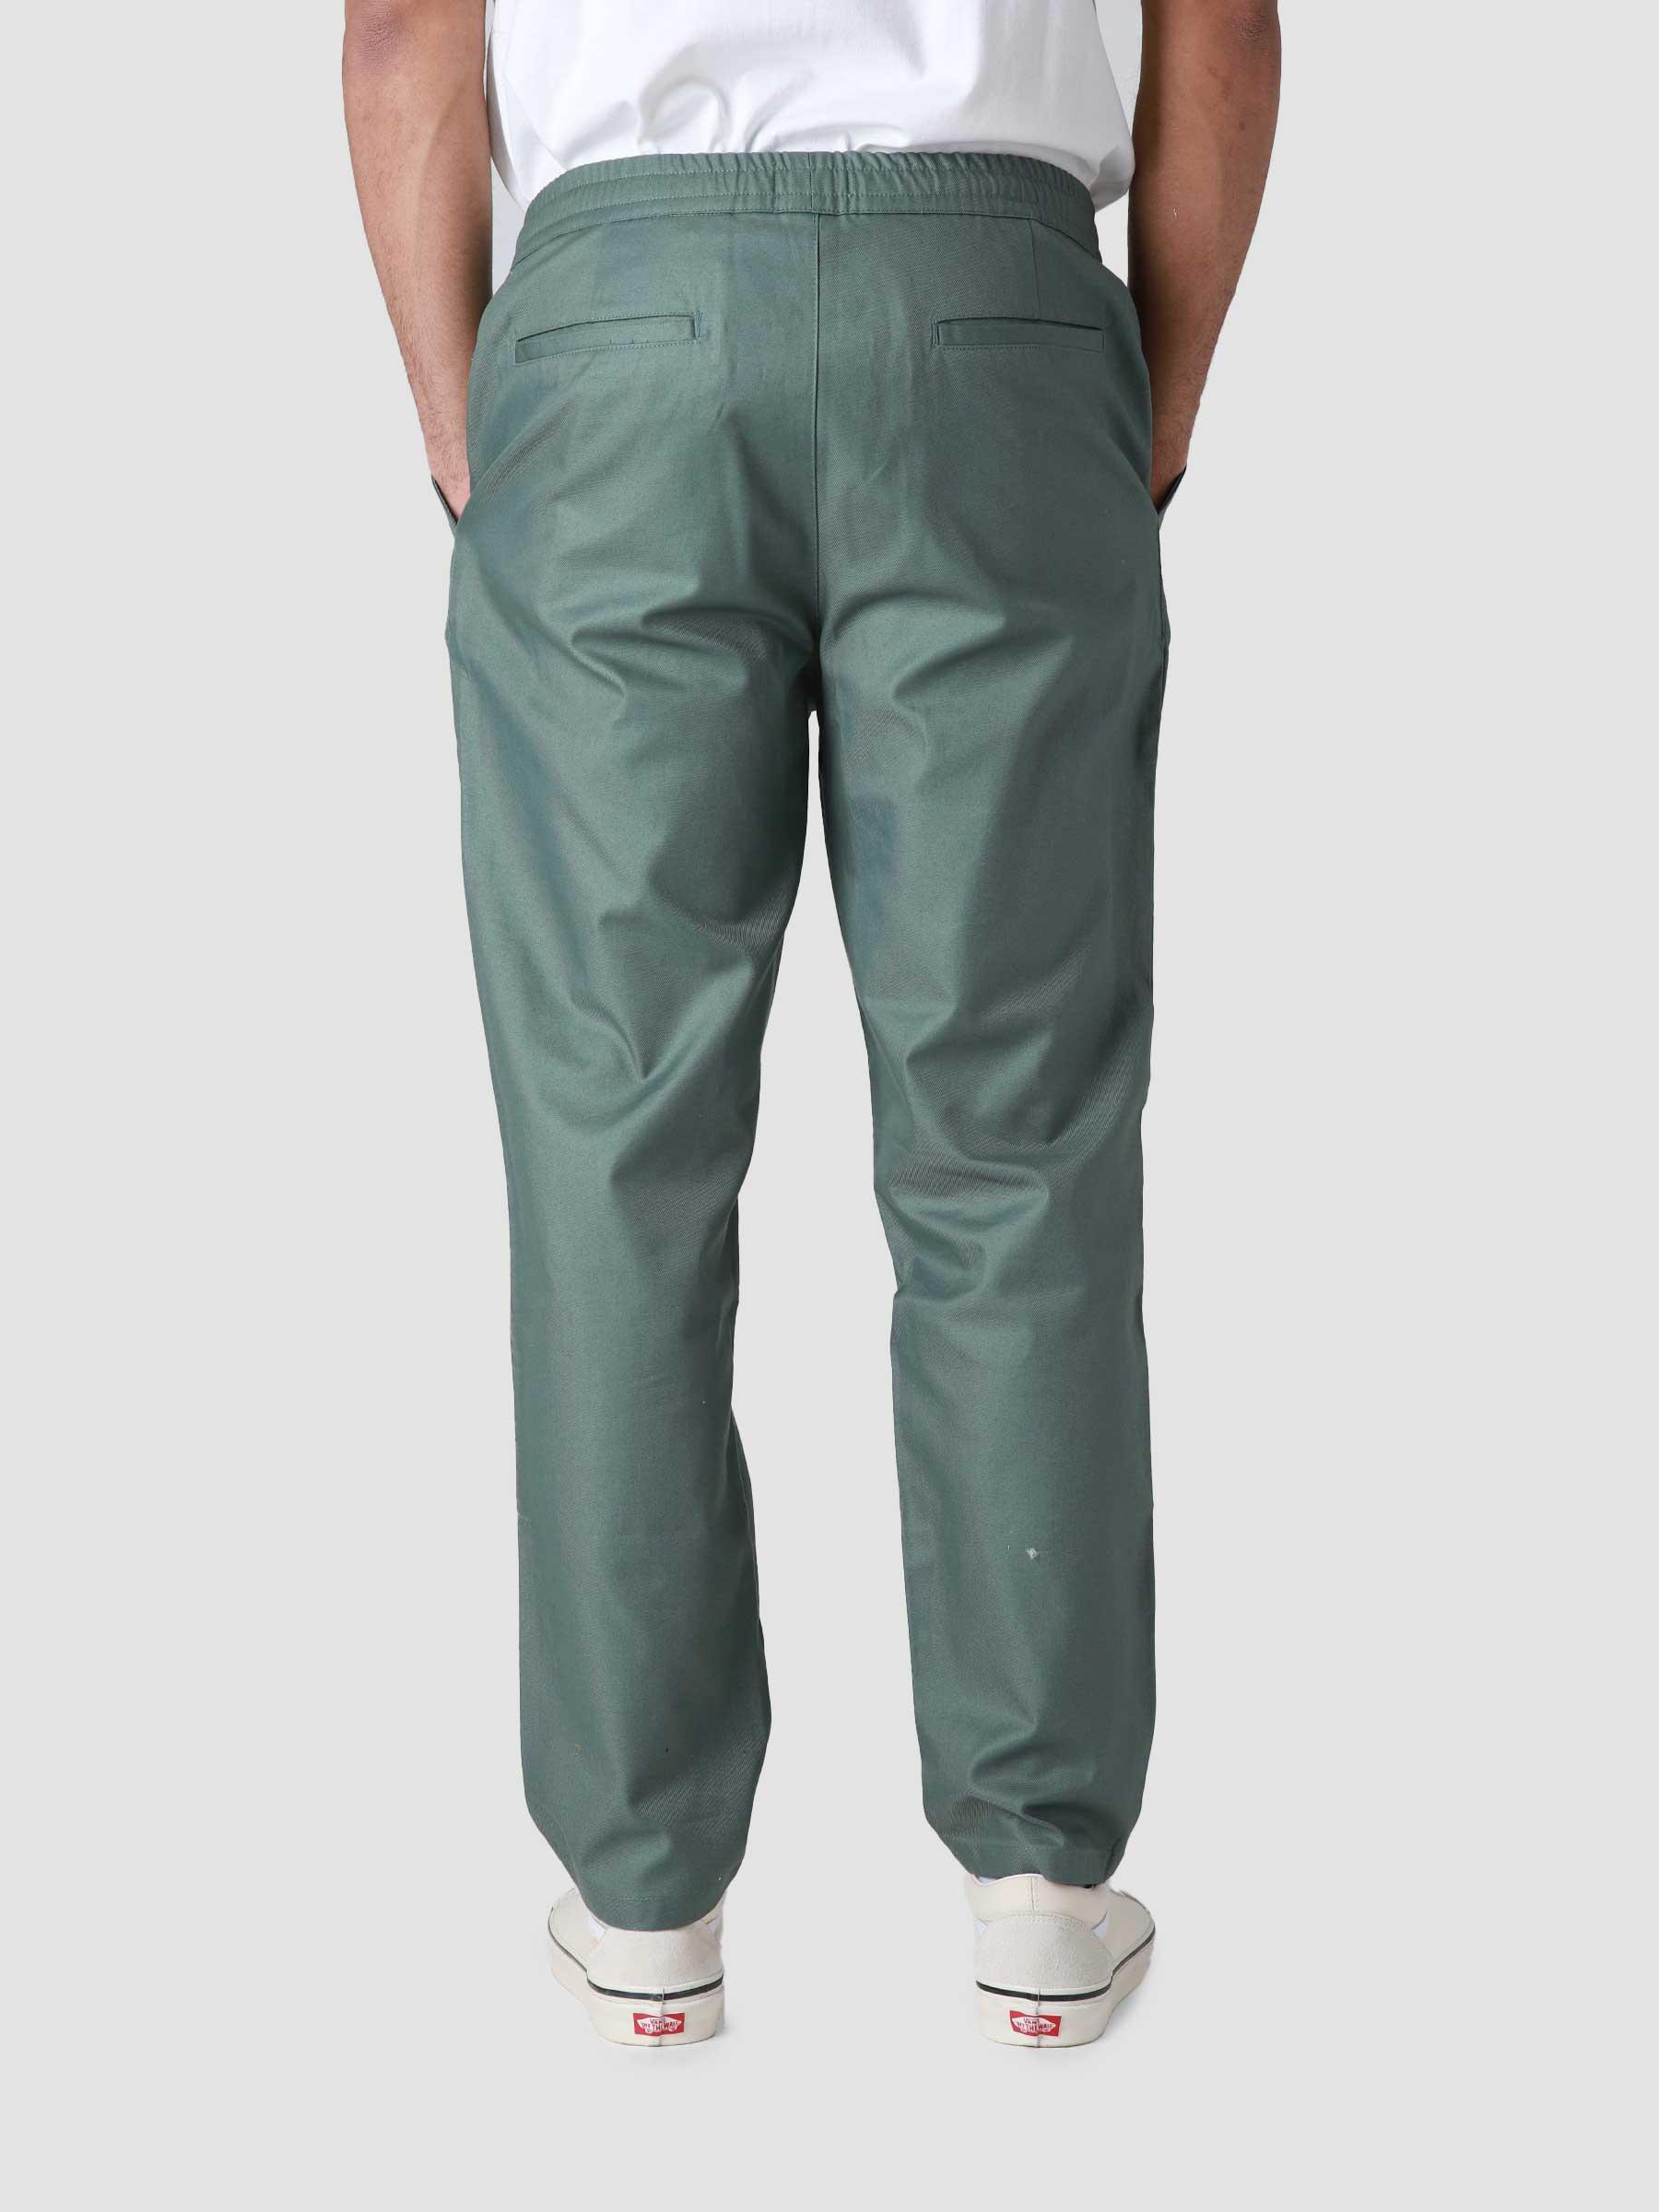 QB308 Suit Pant Olive Green